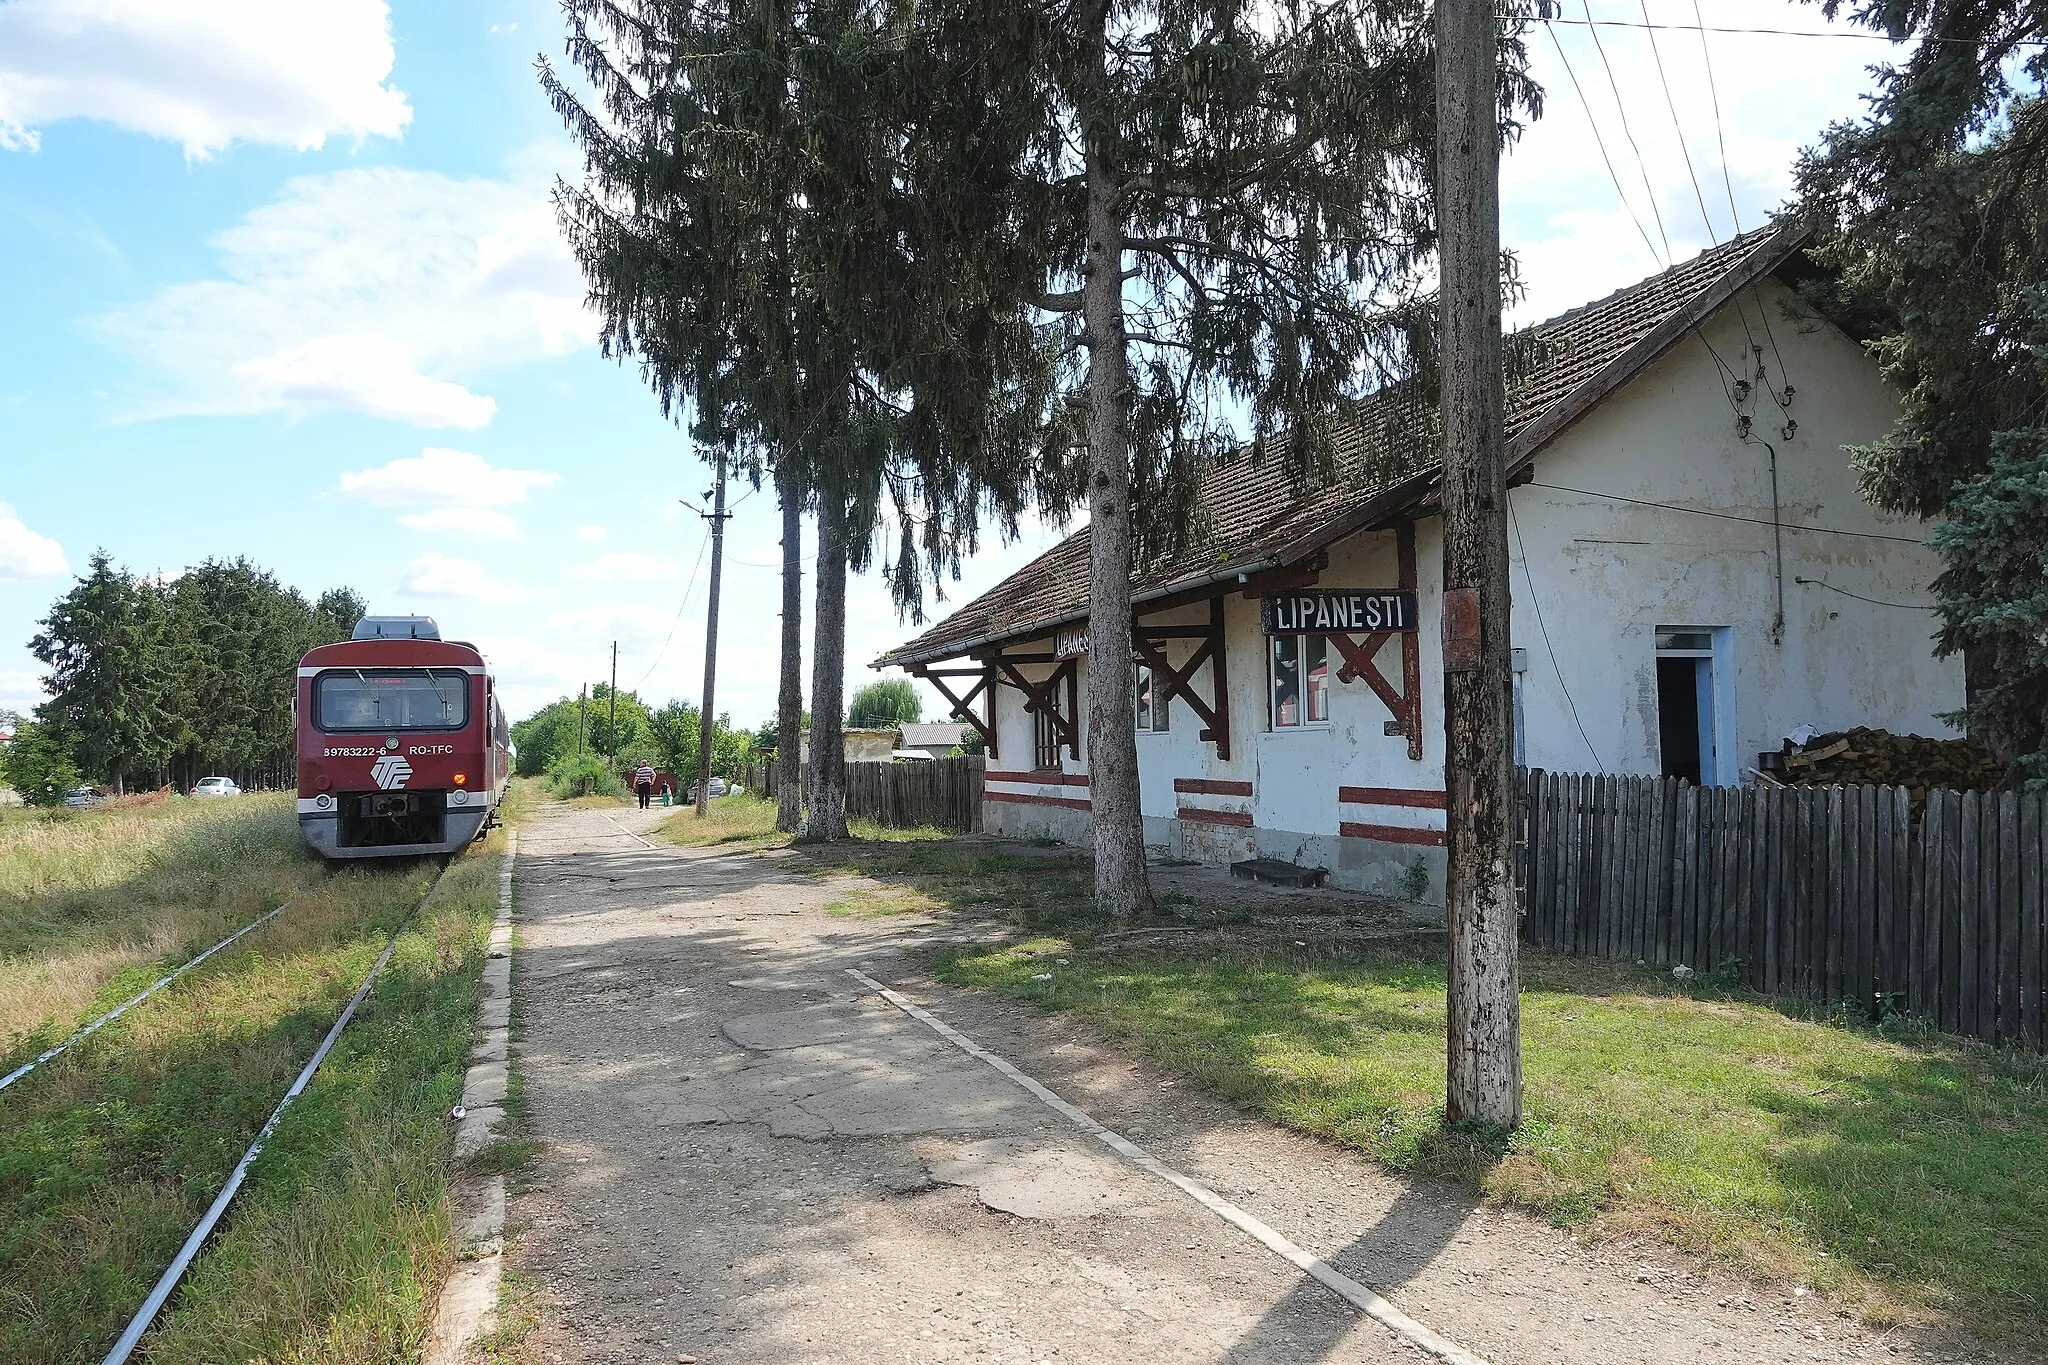 Photo showing: Lipănești train station in Prahova county, Romania.